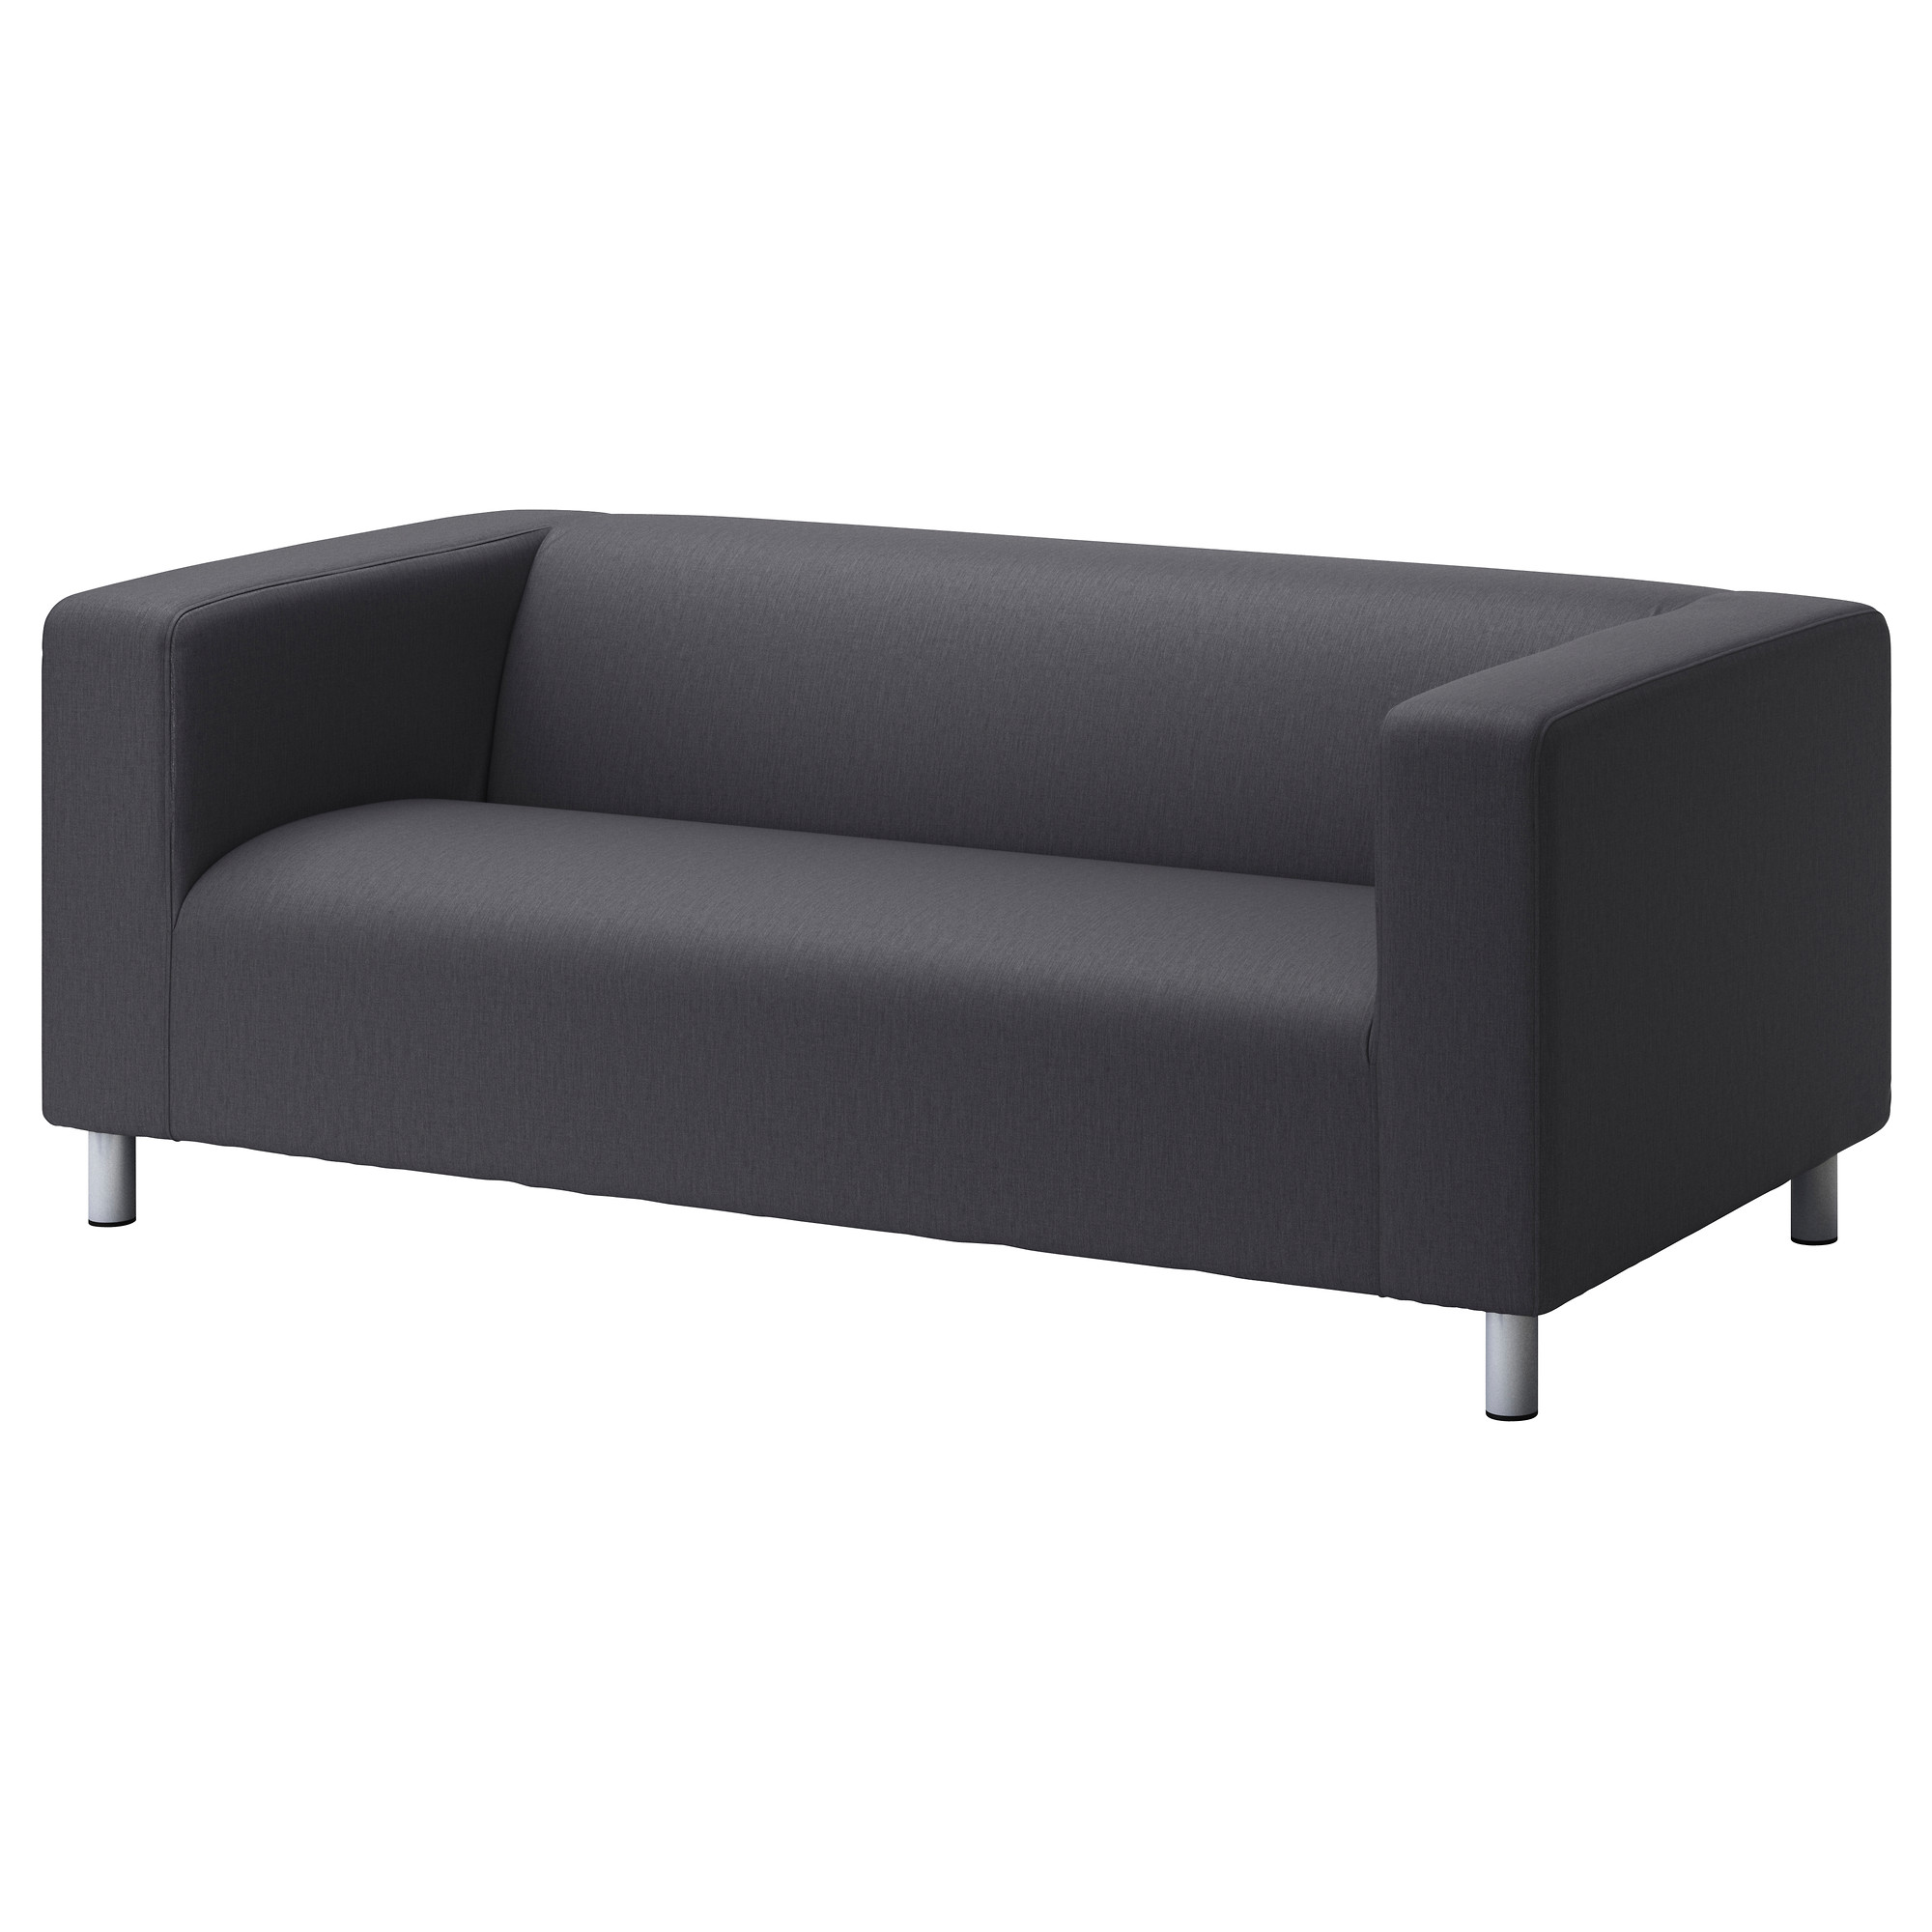 KLIPPAN cover for 2-seat sofa